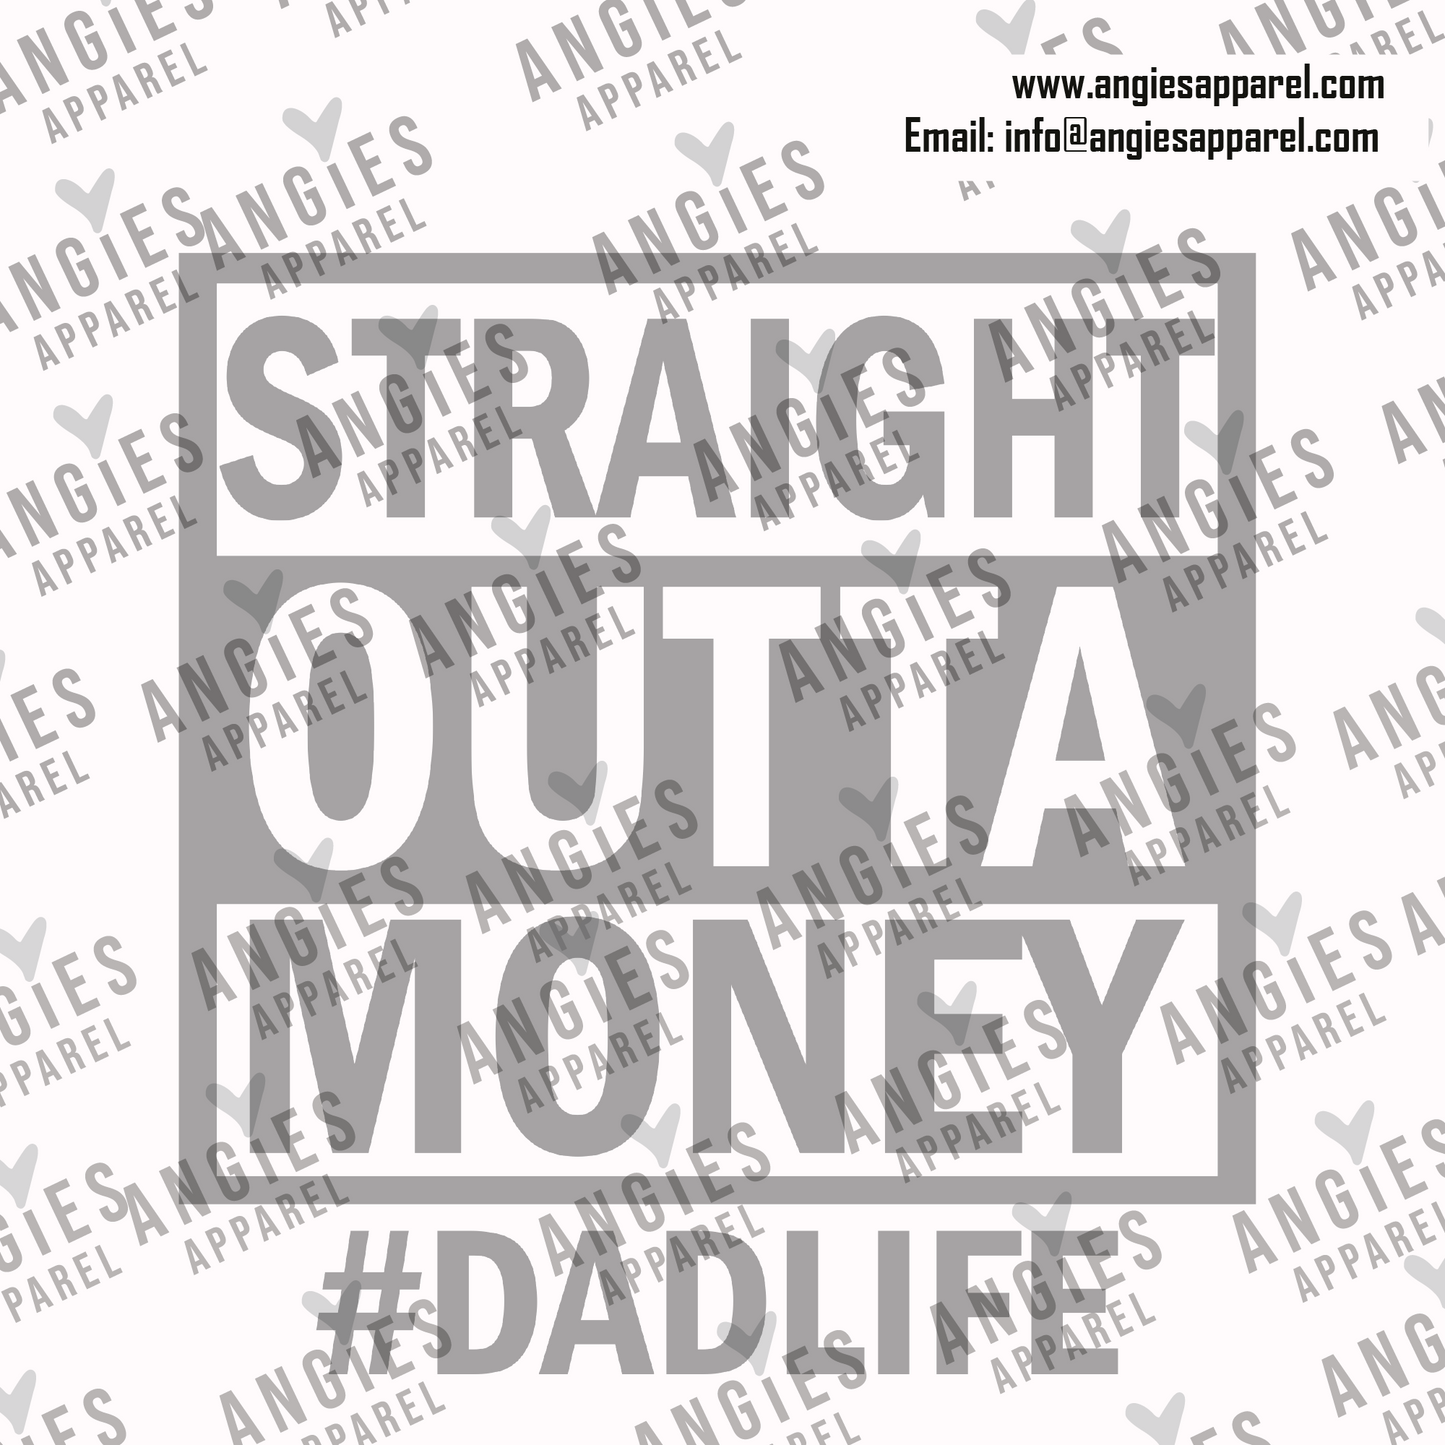 77. Straight Outta Money #DadLife